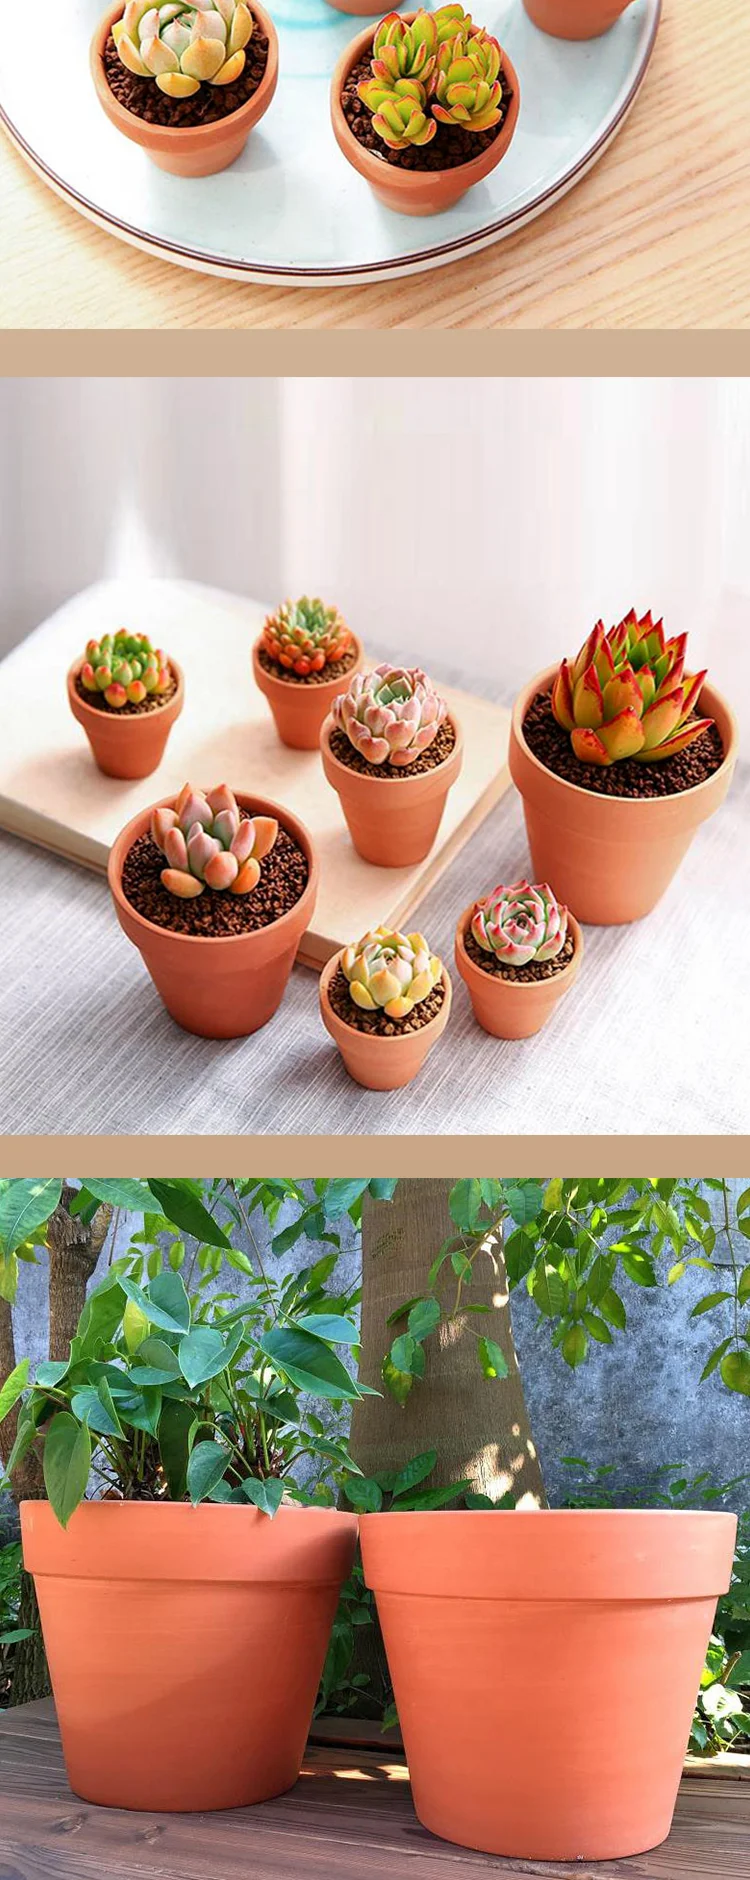 花园用品促销热卖无釉赤土陶器花盆批发 Buy Terracotta Pots Wholesale Terracotta Pots Planters Unglazed Terracotta Pots Product On Alibaba Com